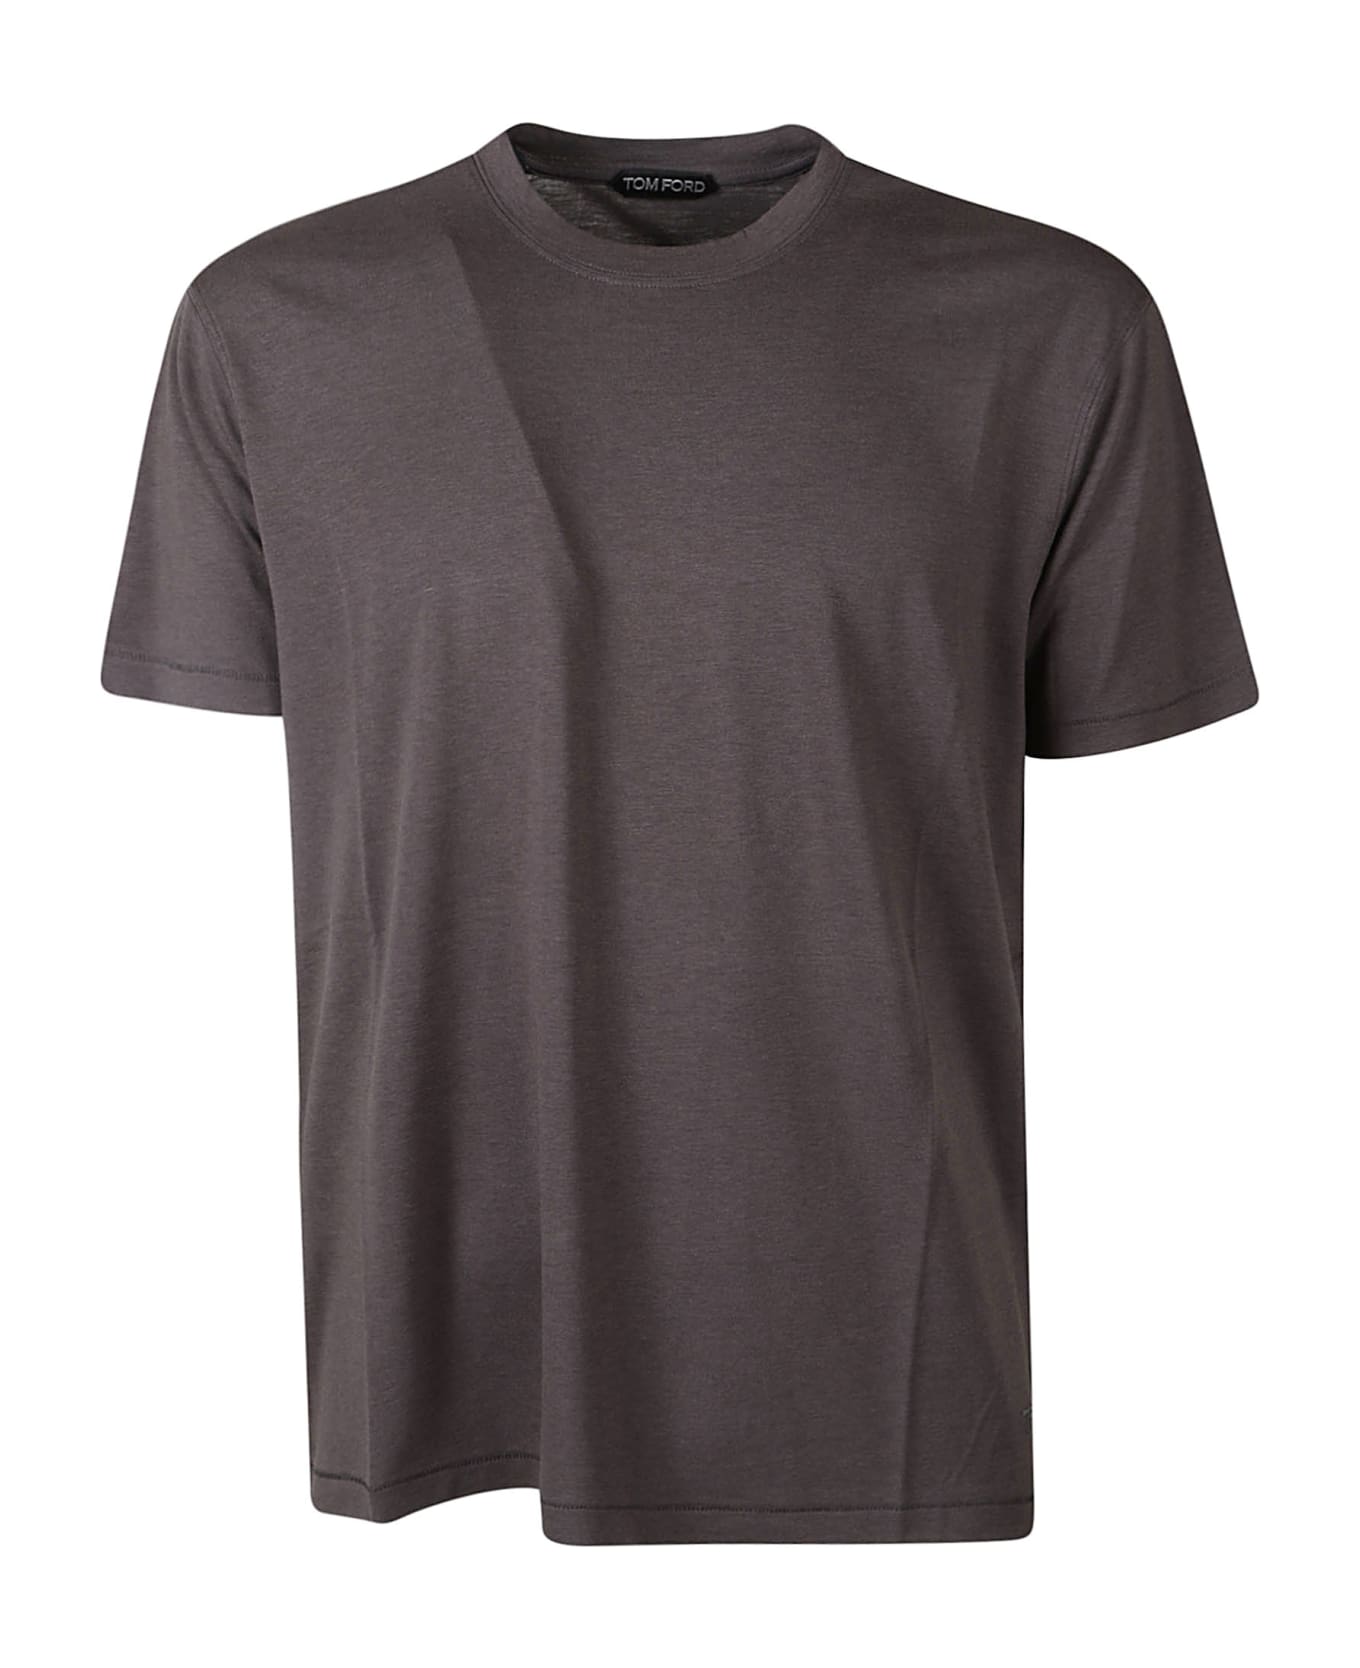 Tom Ford Round Neck T-shirt - GREY